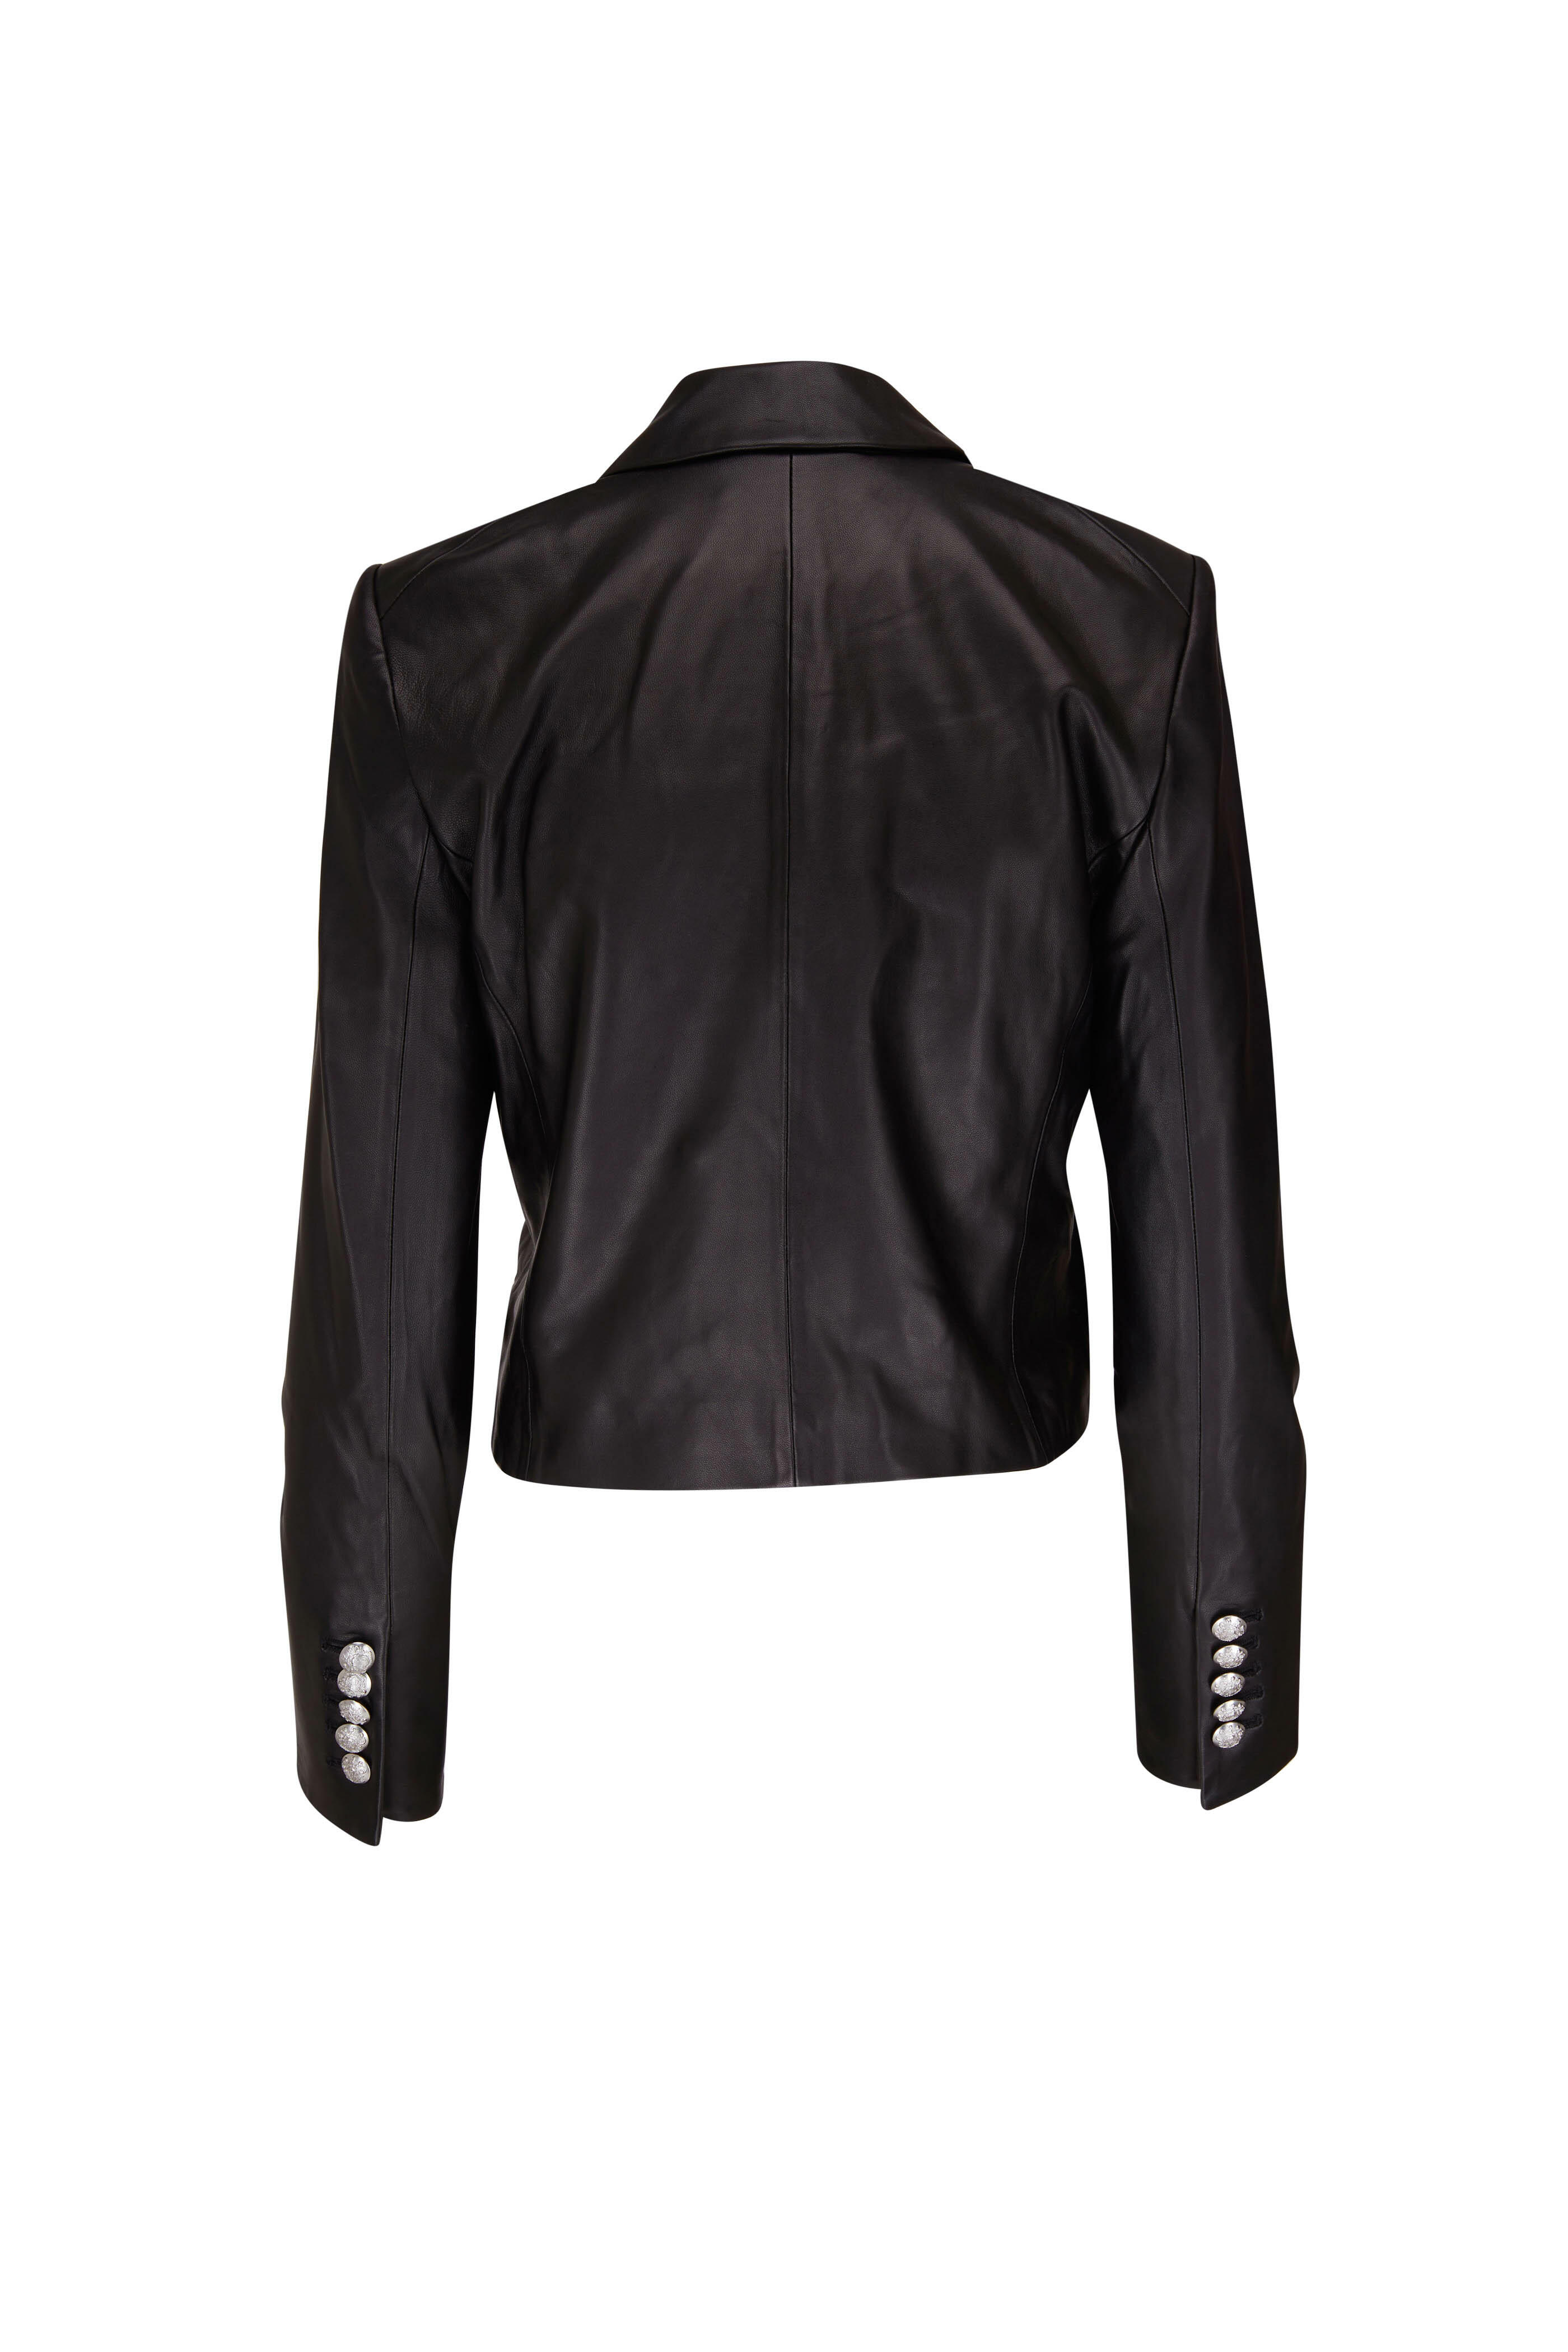 Veronica Beard - Nevis Black Cropped Leather Jacket